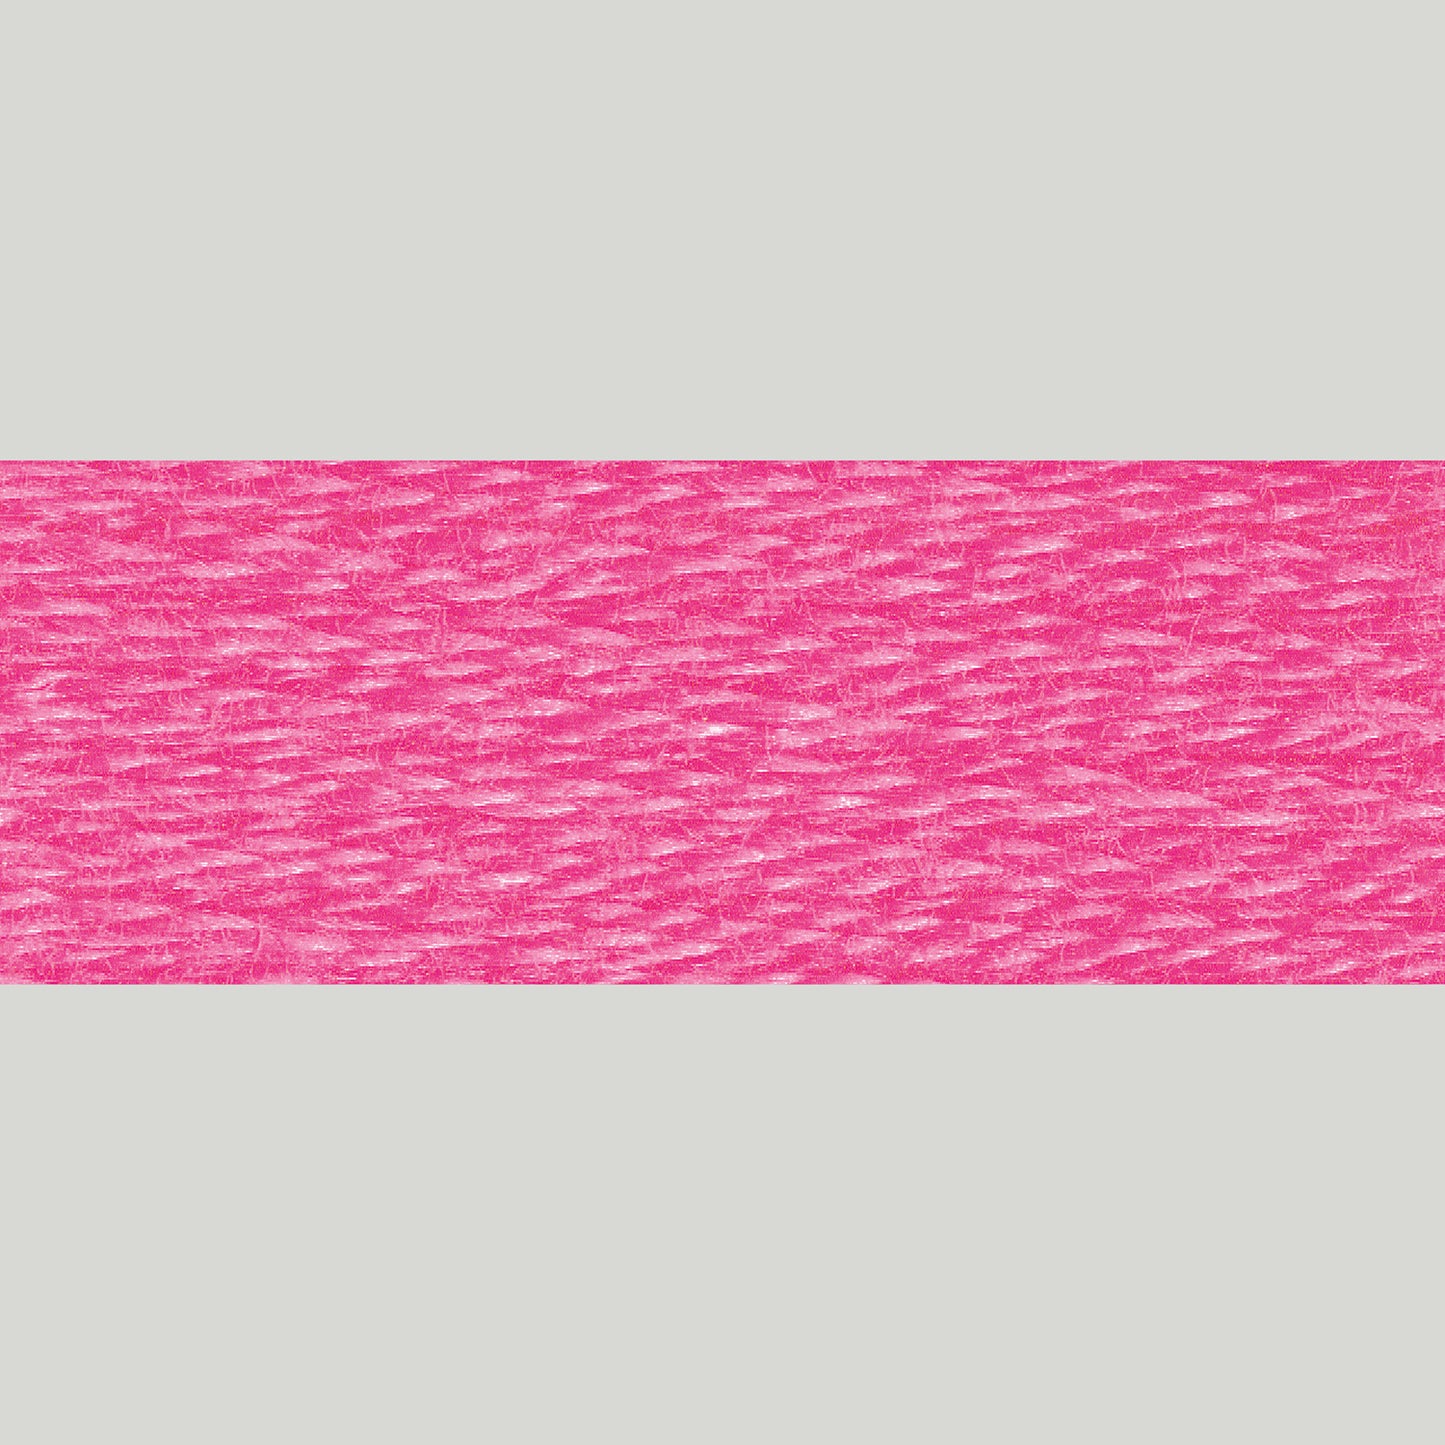 DMC Embroidery Floss - 3805 Cyclamen Pink Alternative View #1